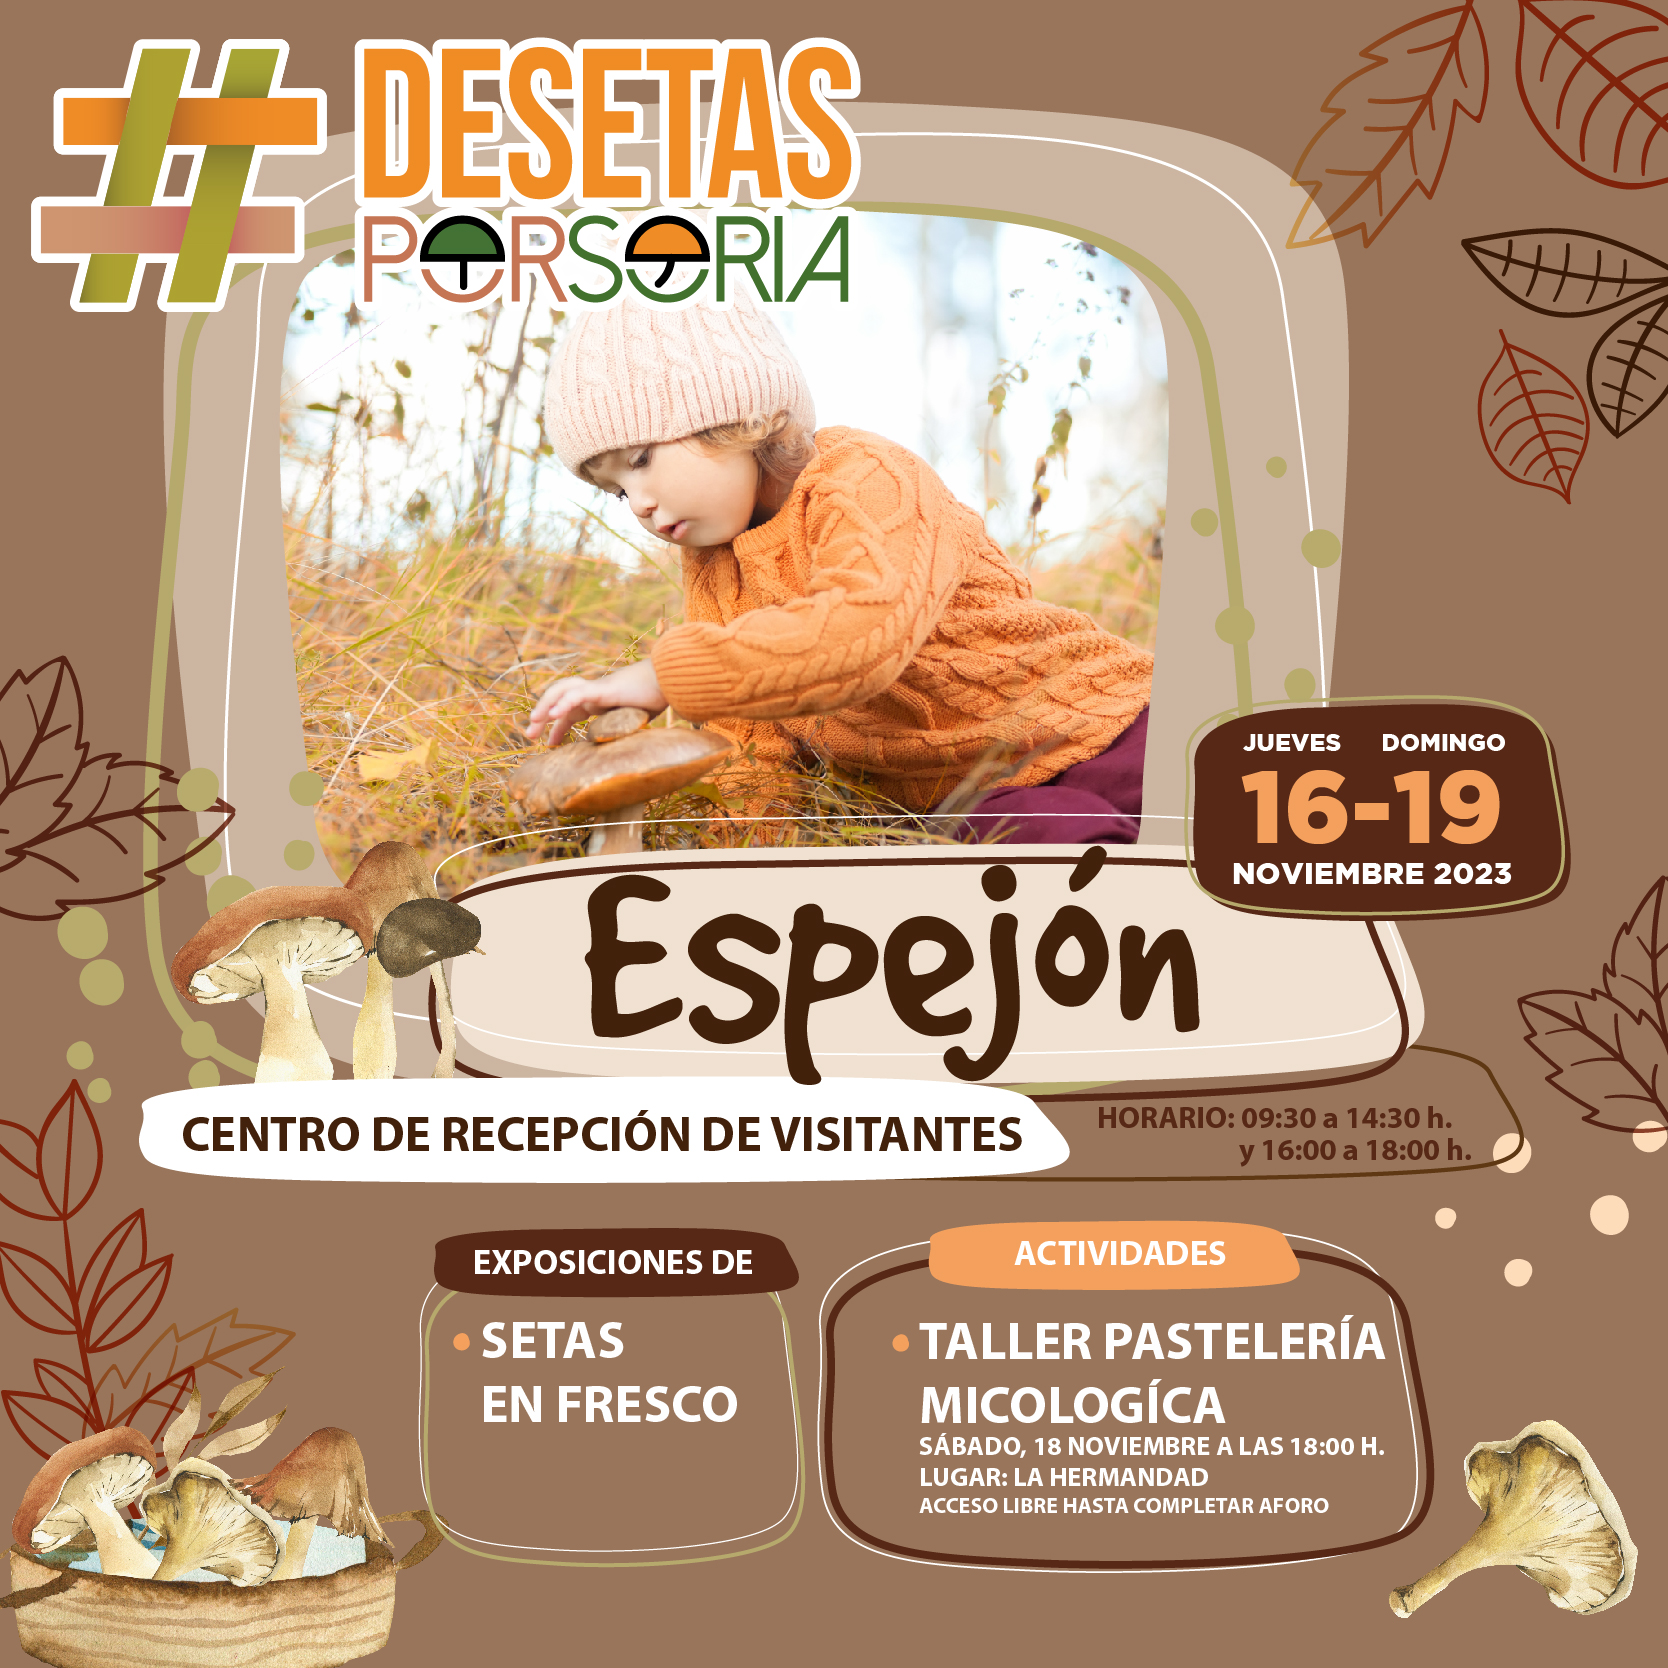 De setas por Soria – Espejón 2023